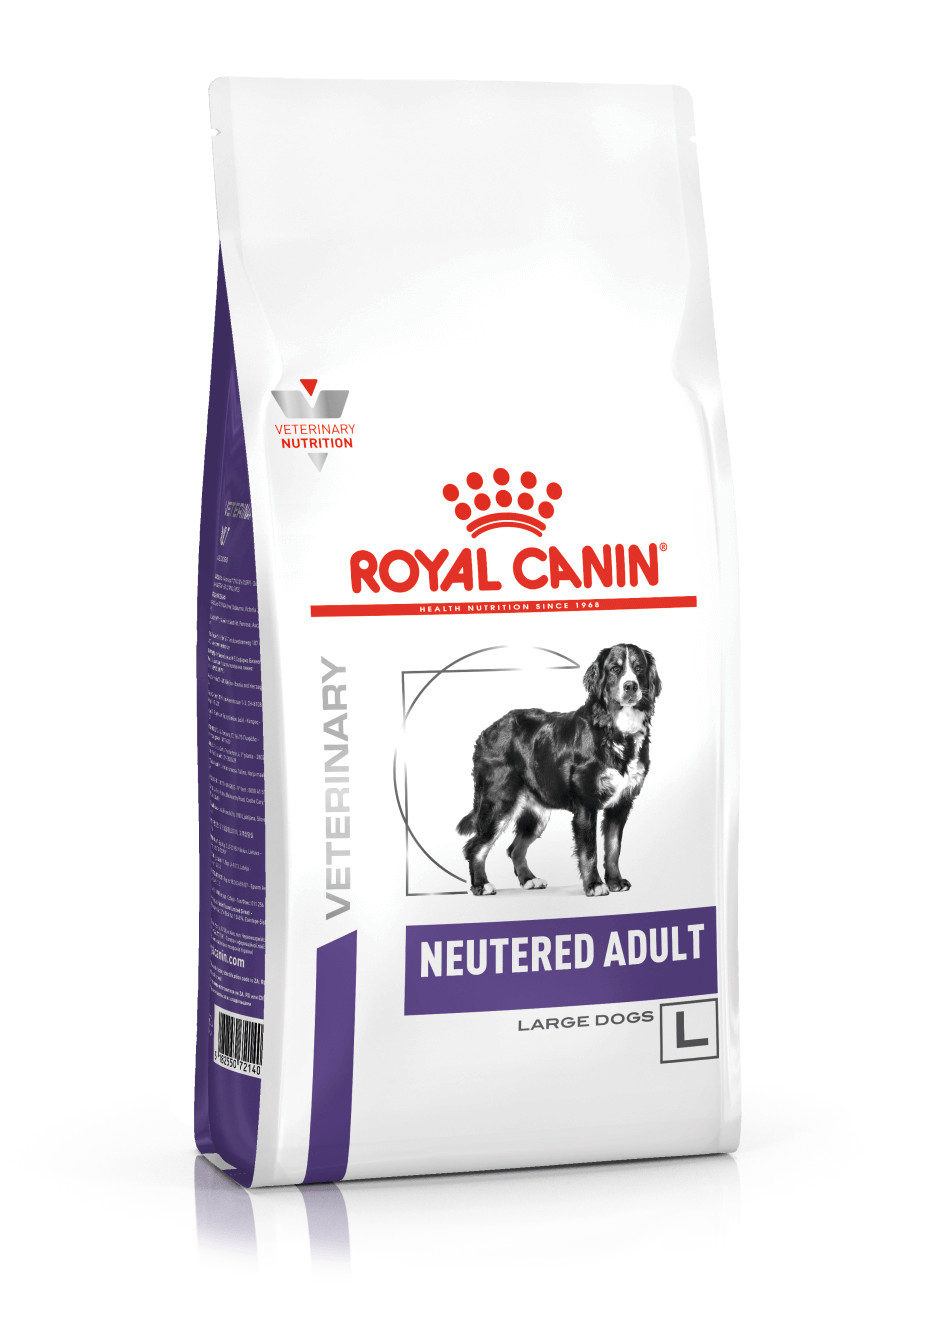 Royal Canin Expert Neutered Adult Large Dogs hondenvoer